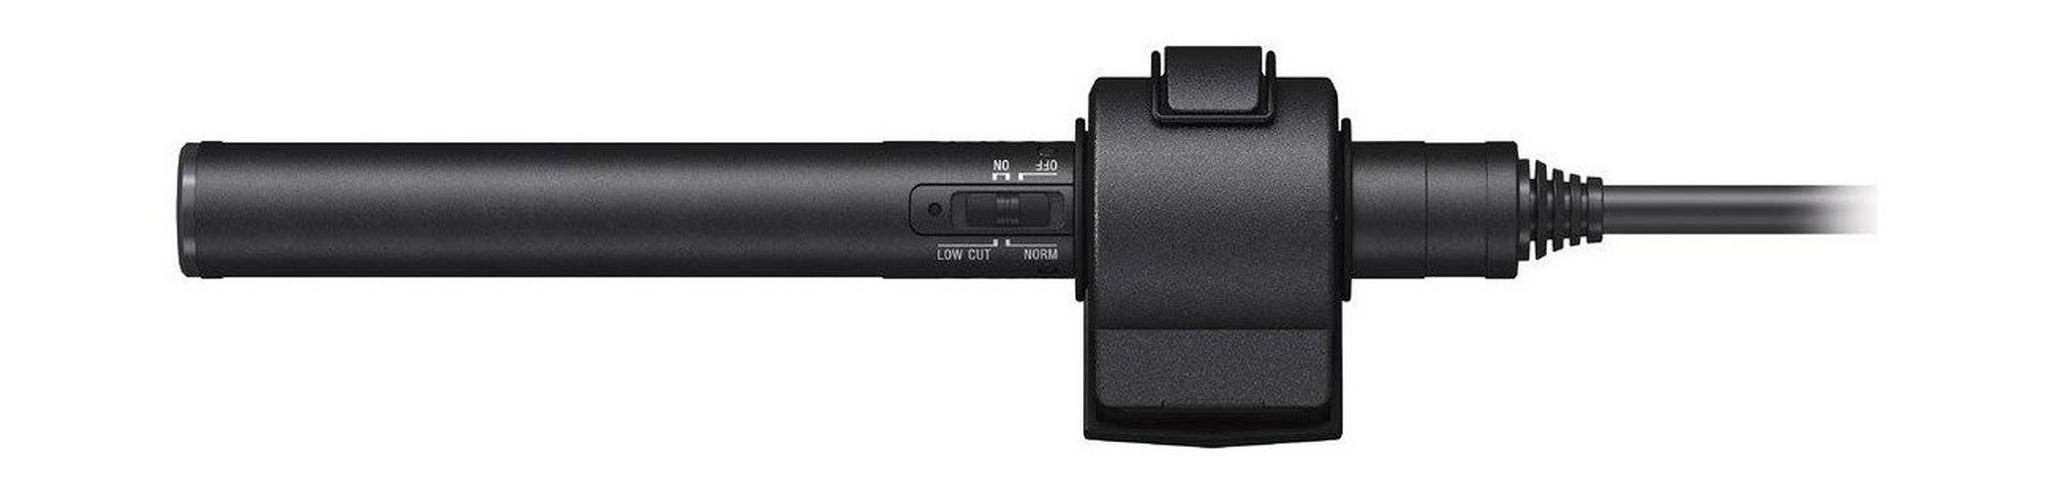 Sony Shotgun Microphone (ECMCG60) - Black